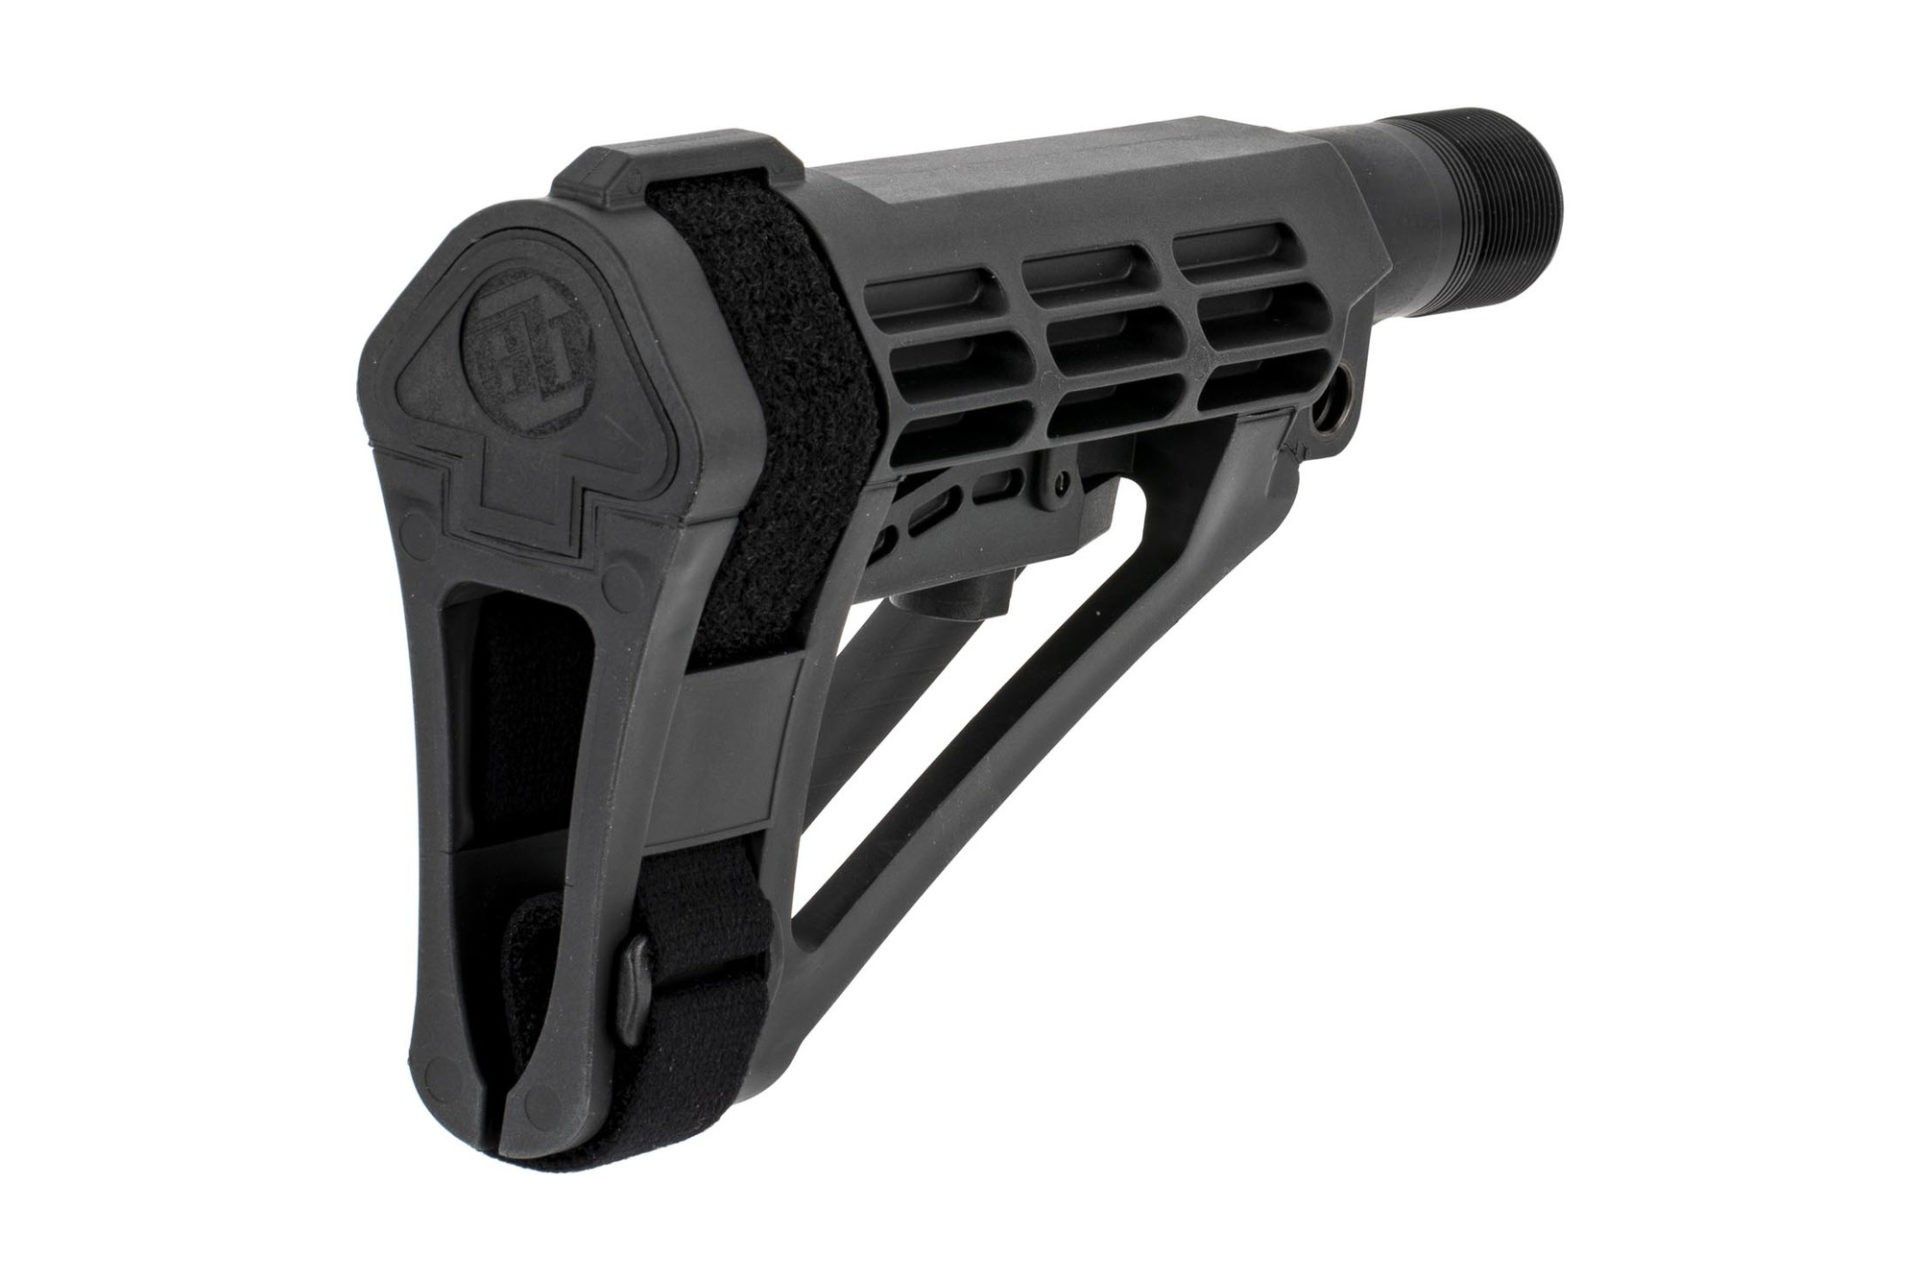 SB Tactical SBA4 Pistol Stabilizing Brace - $89.99.